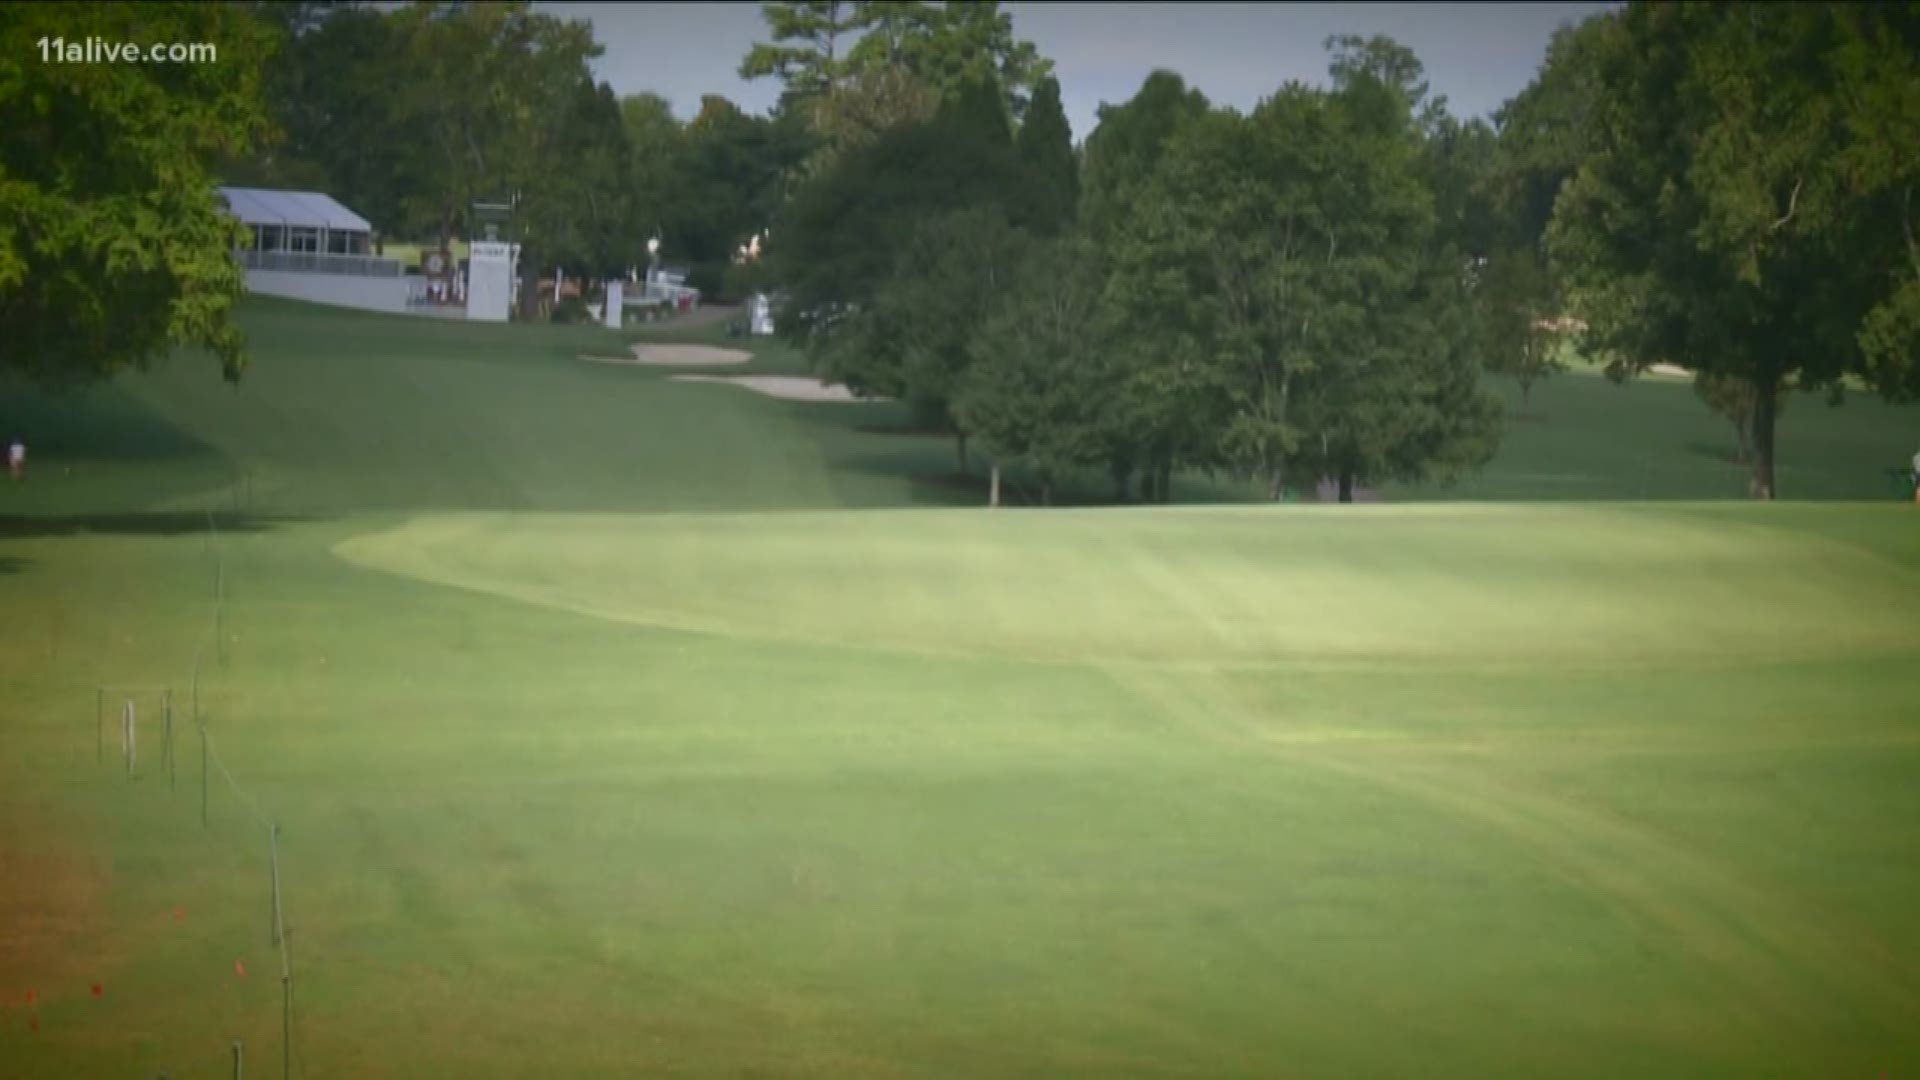 The golf tournament tees off on Thursday in Atlanta.